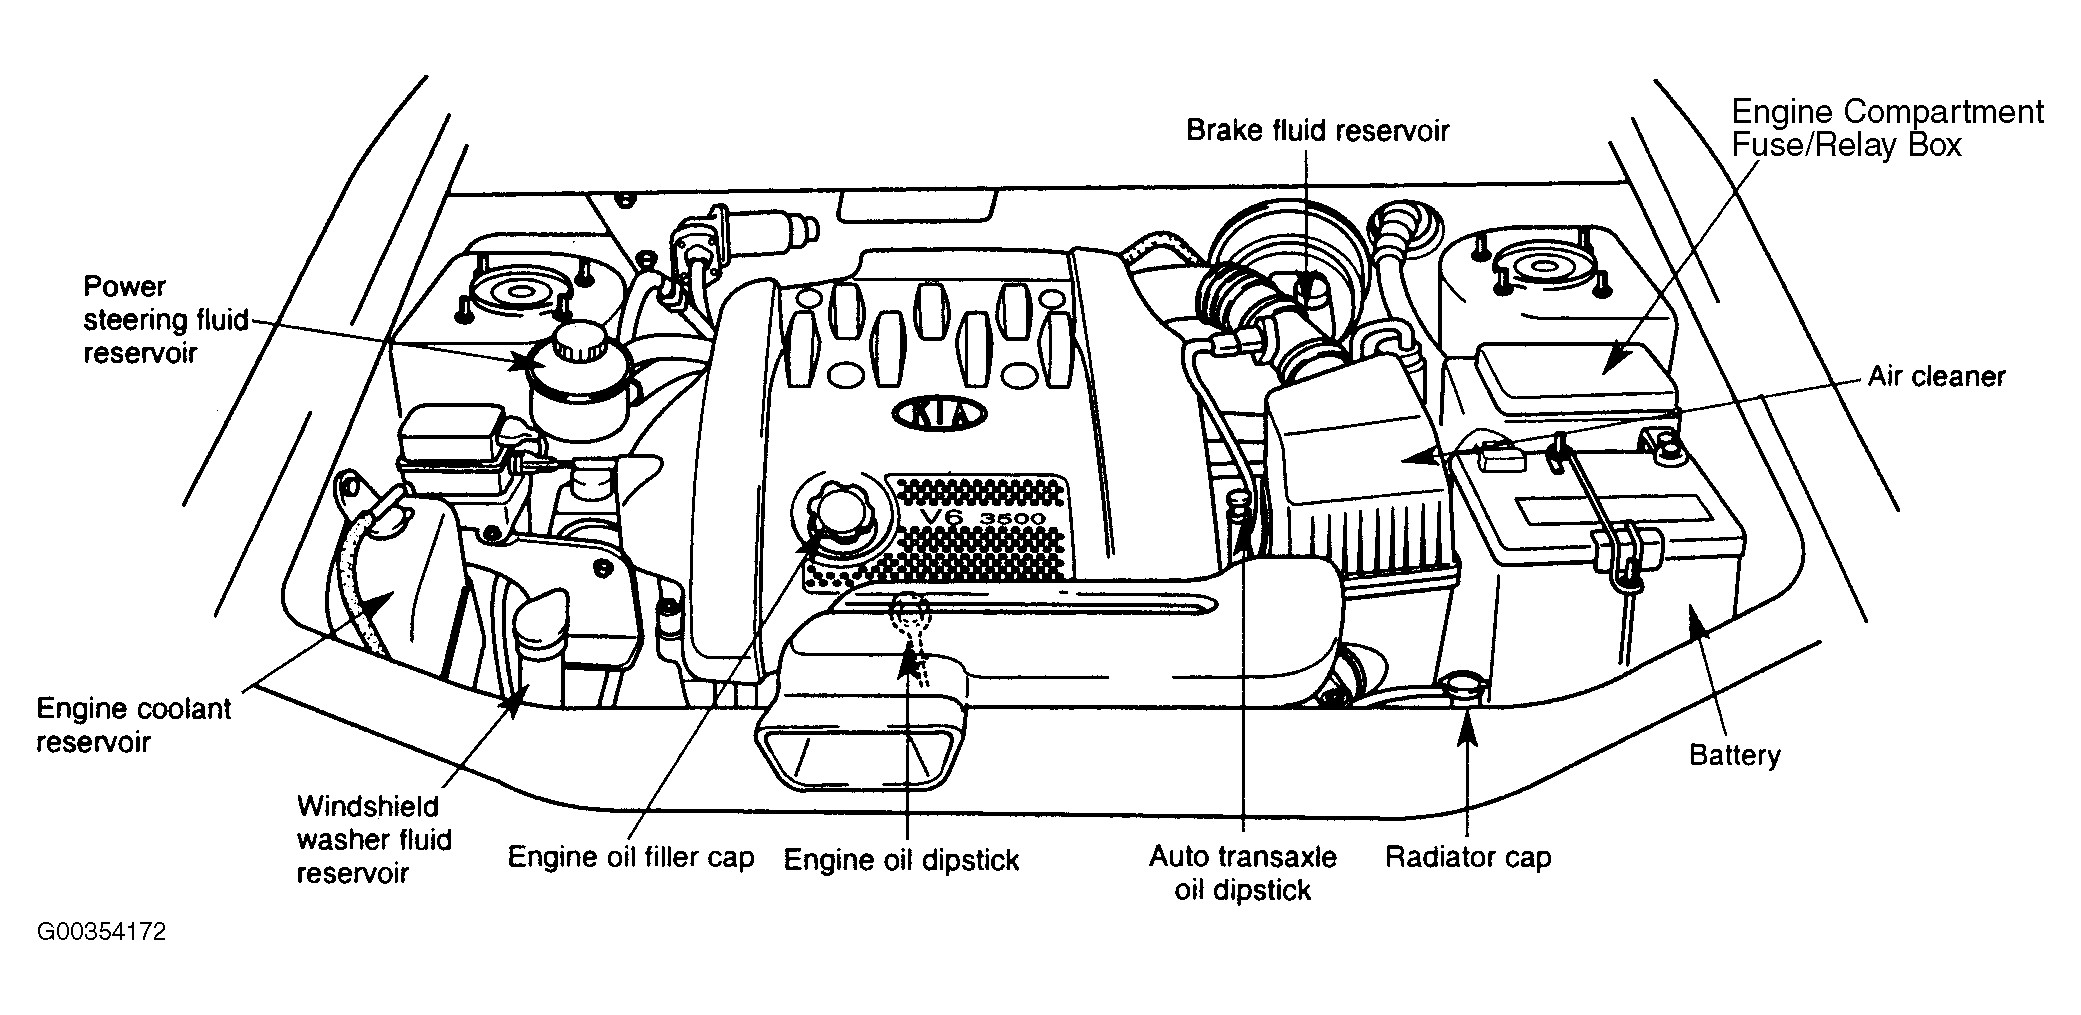 2002 Kia Sedona Engine Diagram Radio and Instrument Cluster Lights Stopped Working On My 2002 Kia Of 2002 Kia Sedona Engine Diagram